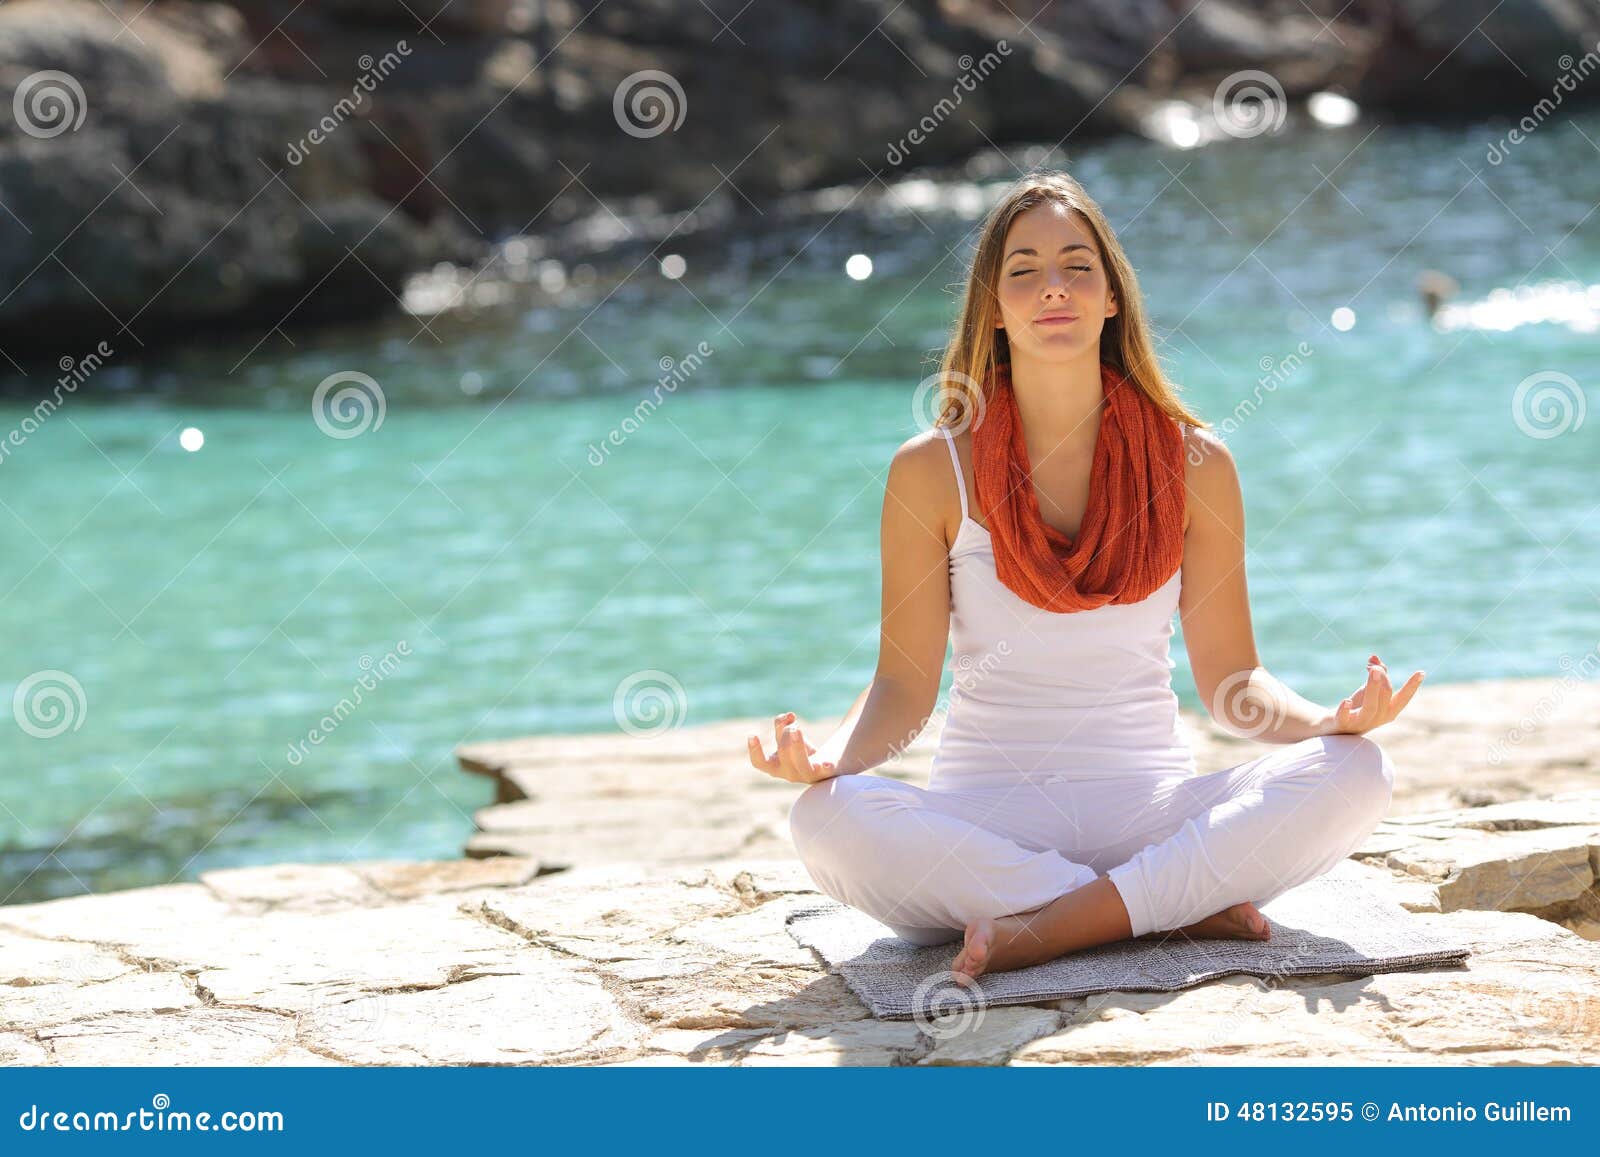 relaxed girl doing yoga exercises on holidays